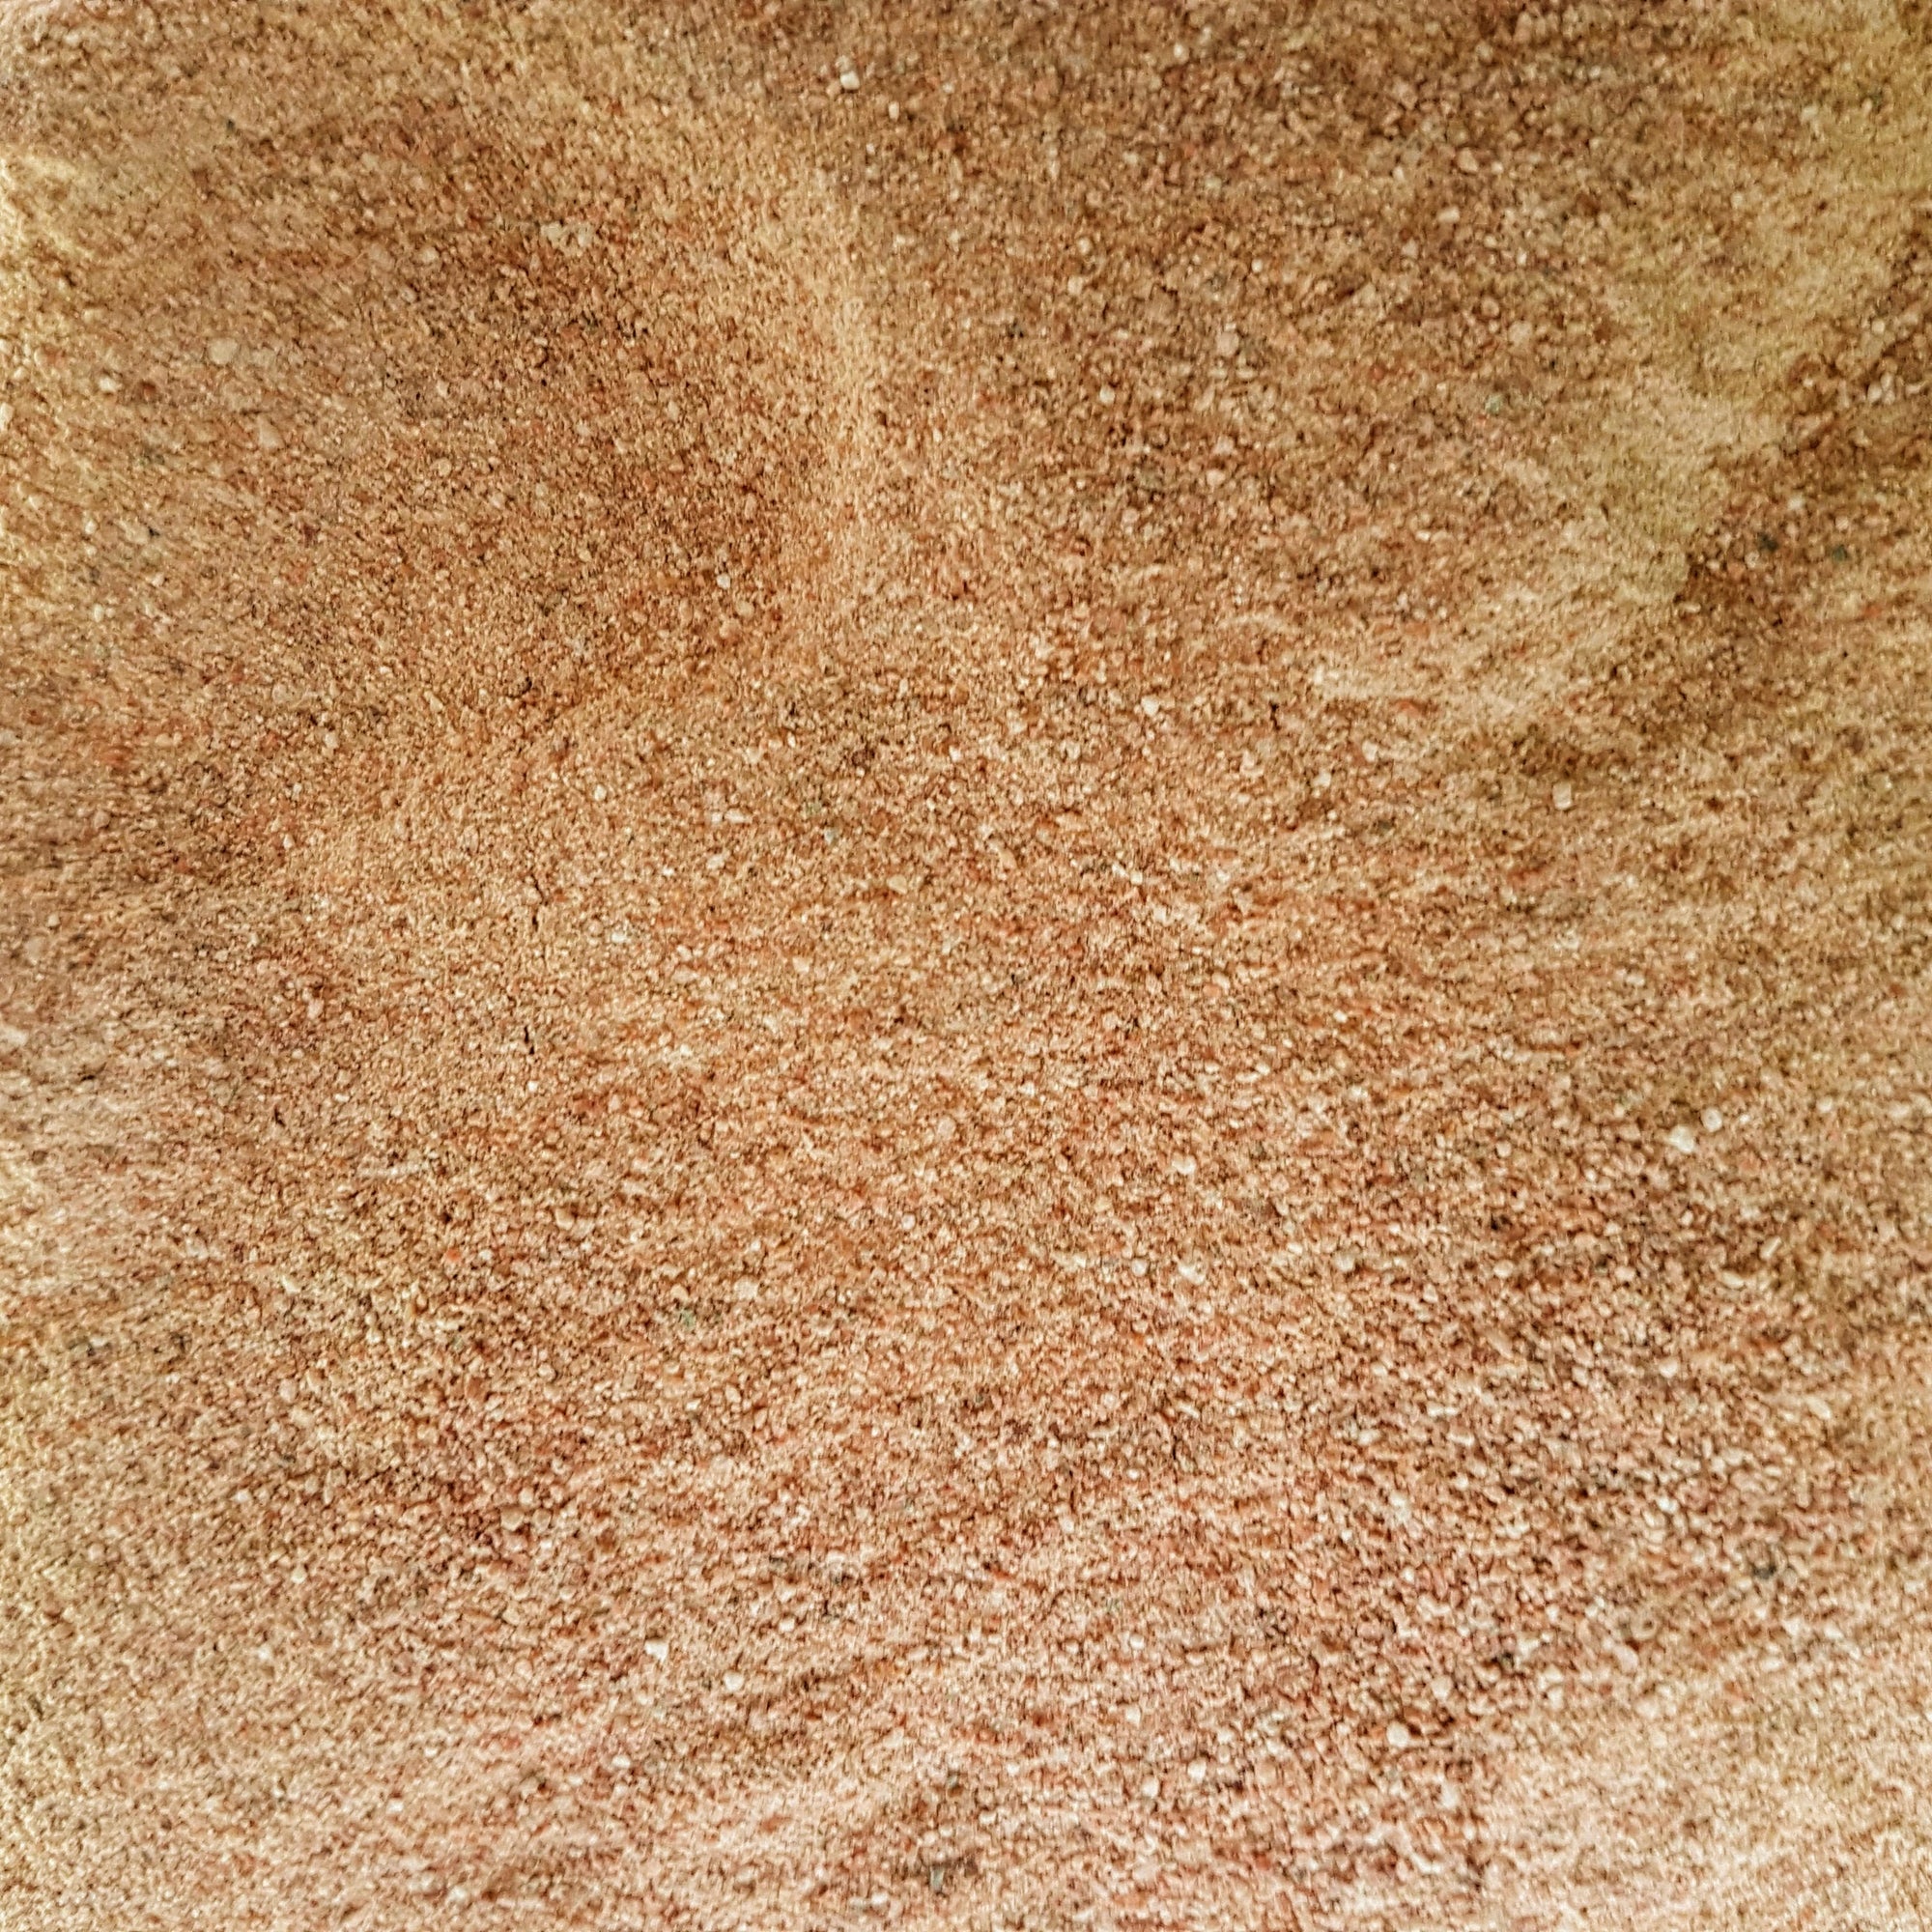 Zeolite Sand